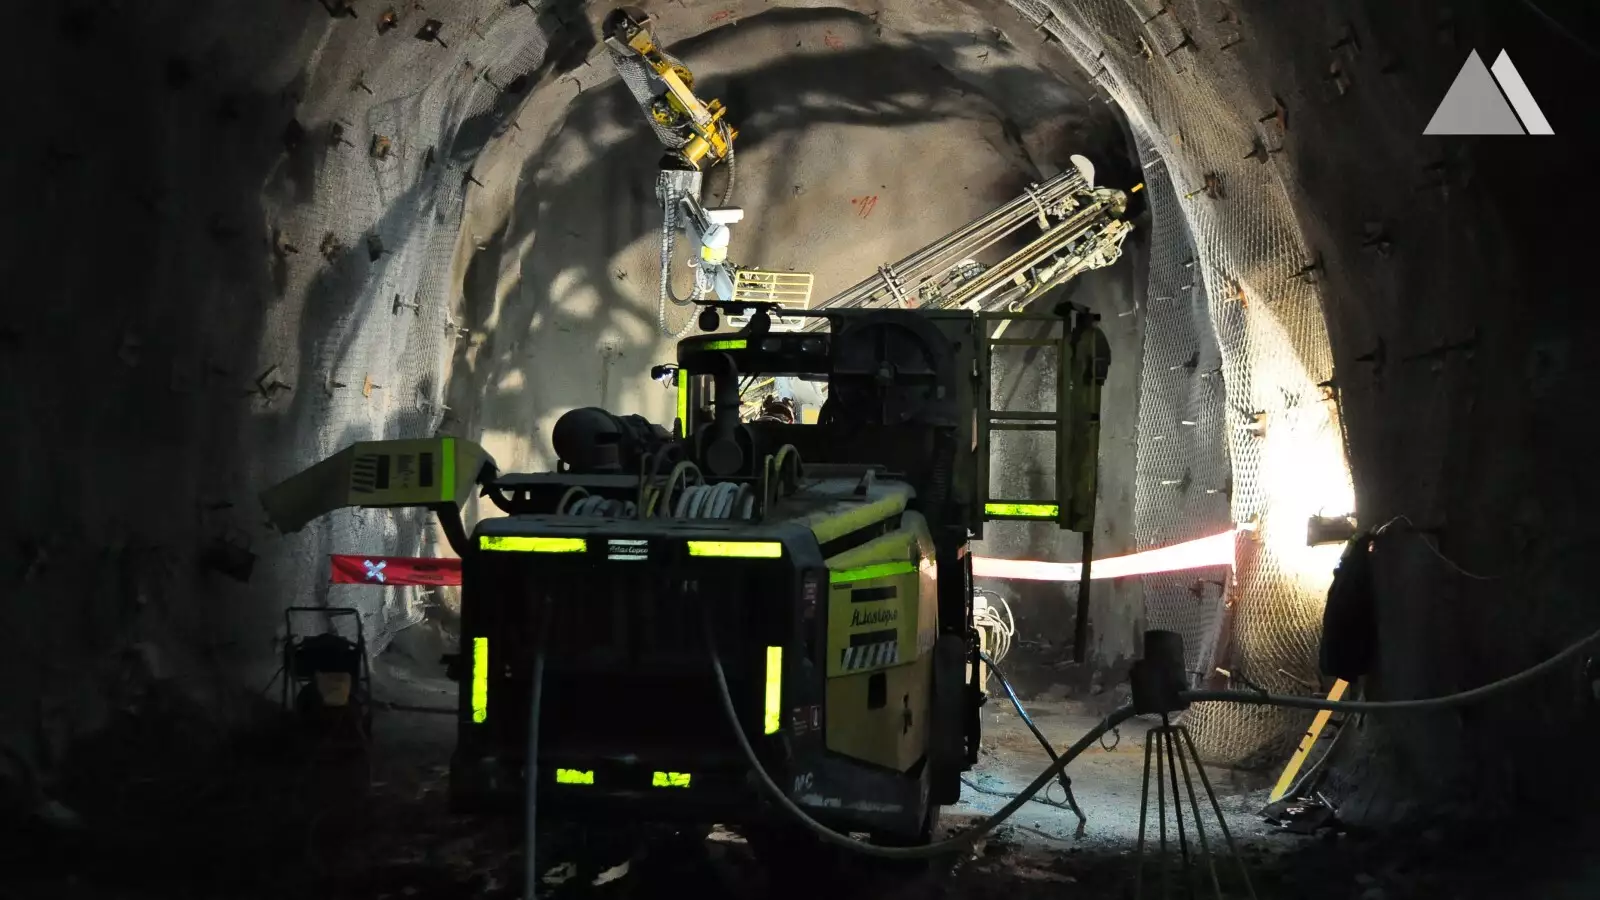 Mineração / Túneis - Codelco El Teniente Copper Mine 2016